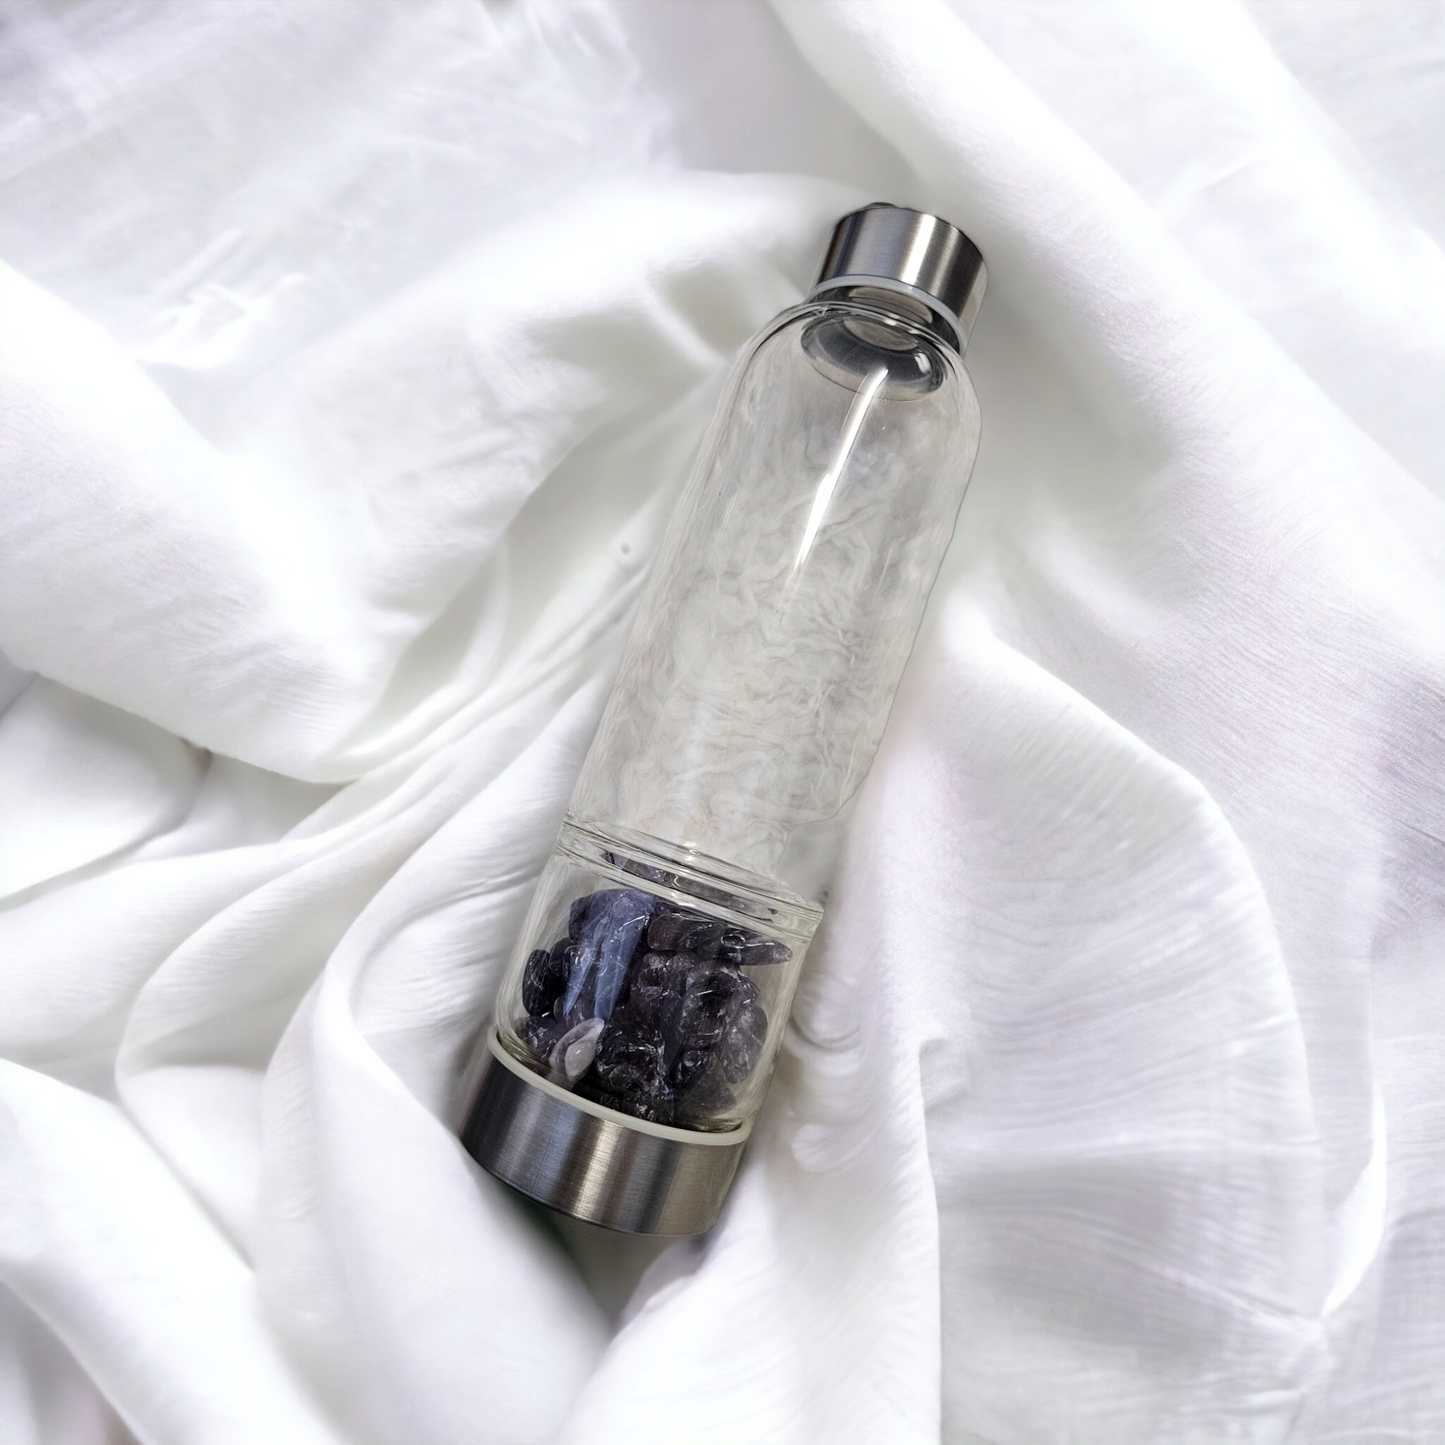 Amethyst crystal water bottle sold in Australia crystal shop.